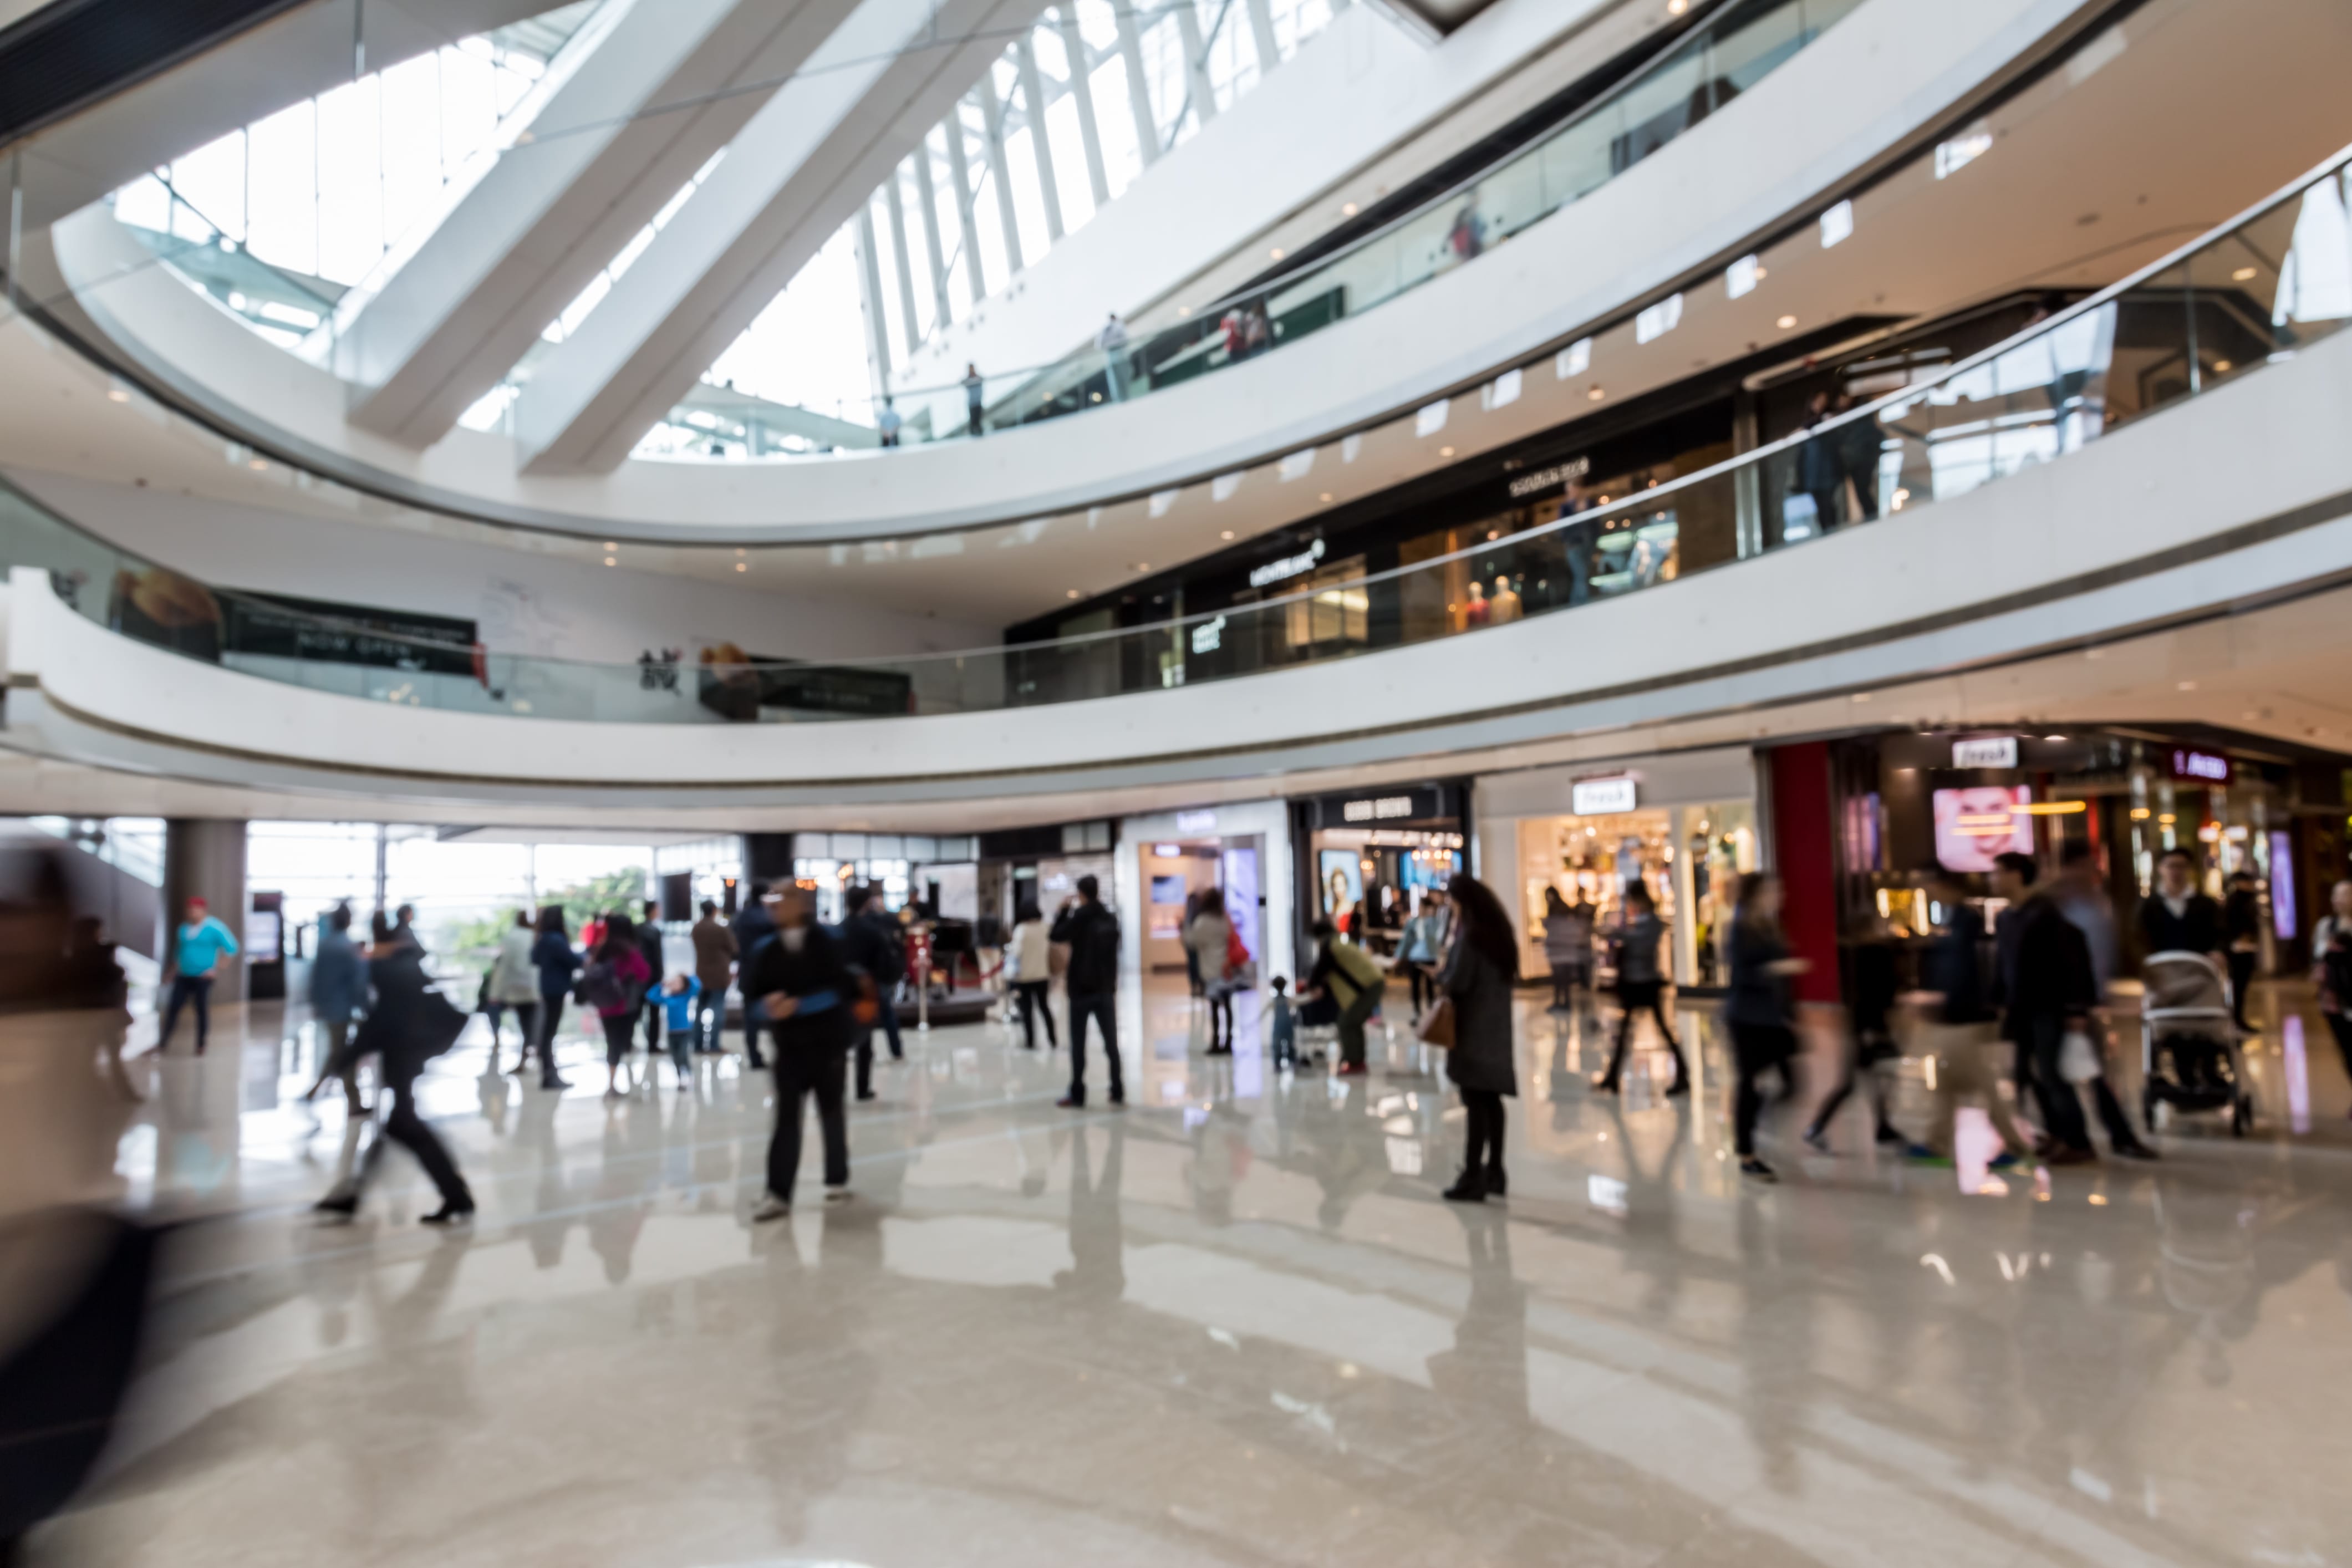 Innovation in shopping malls industry